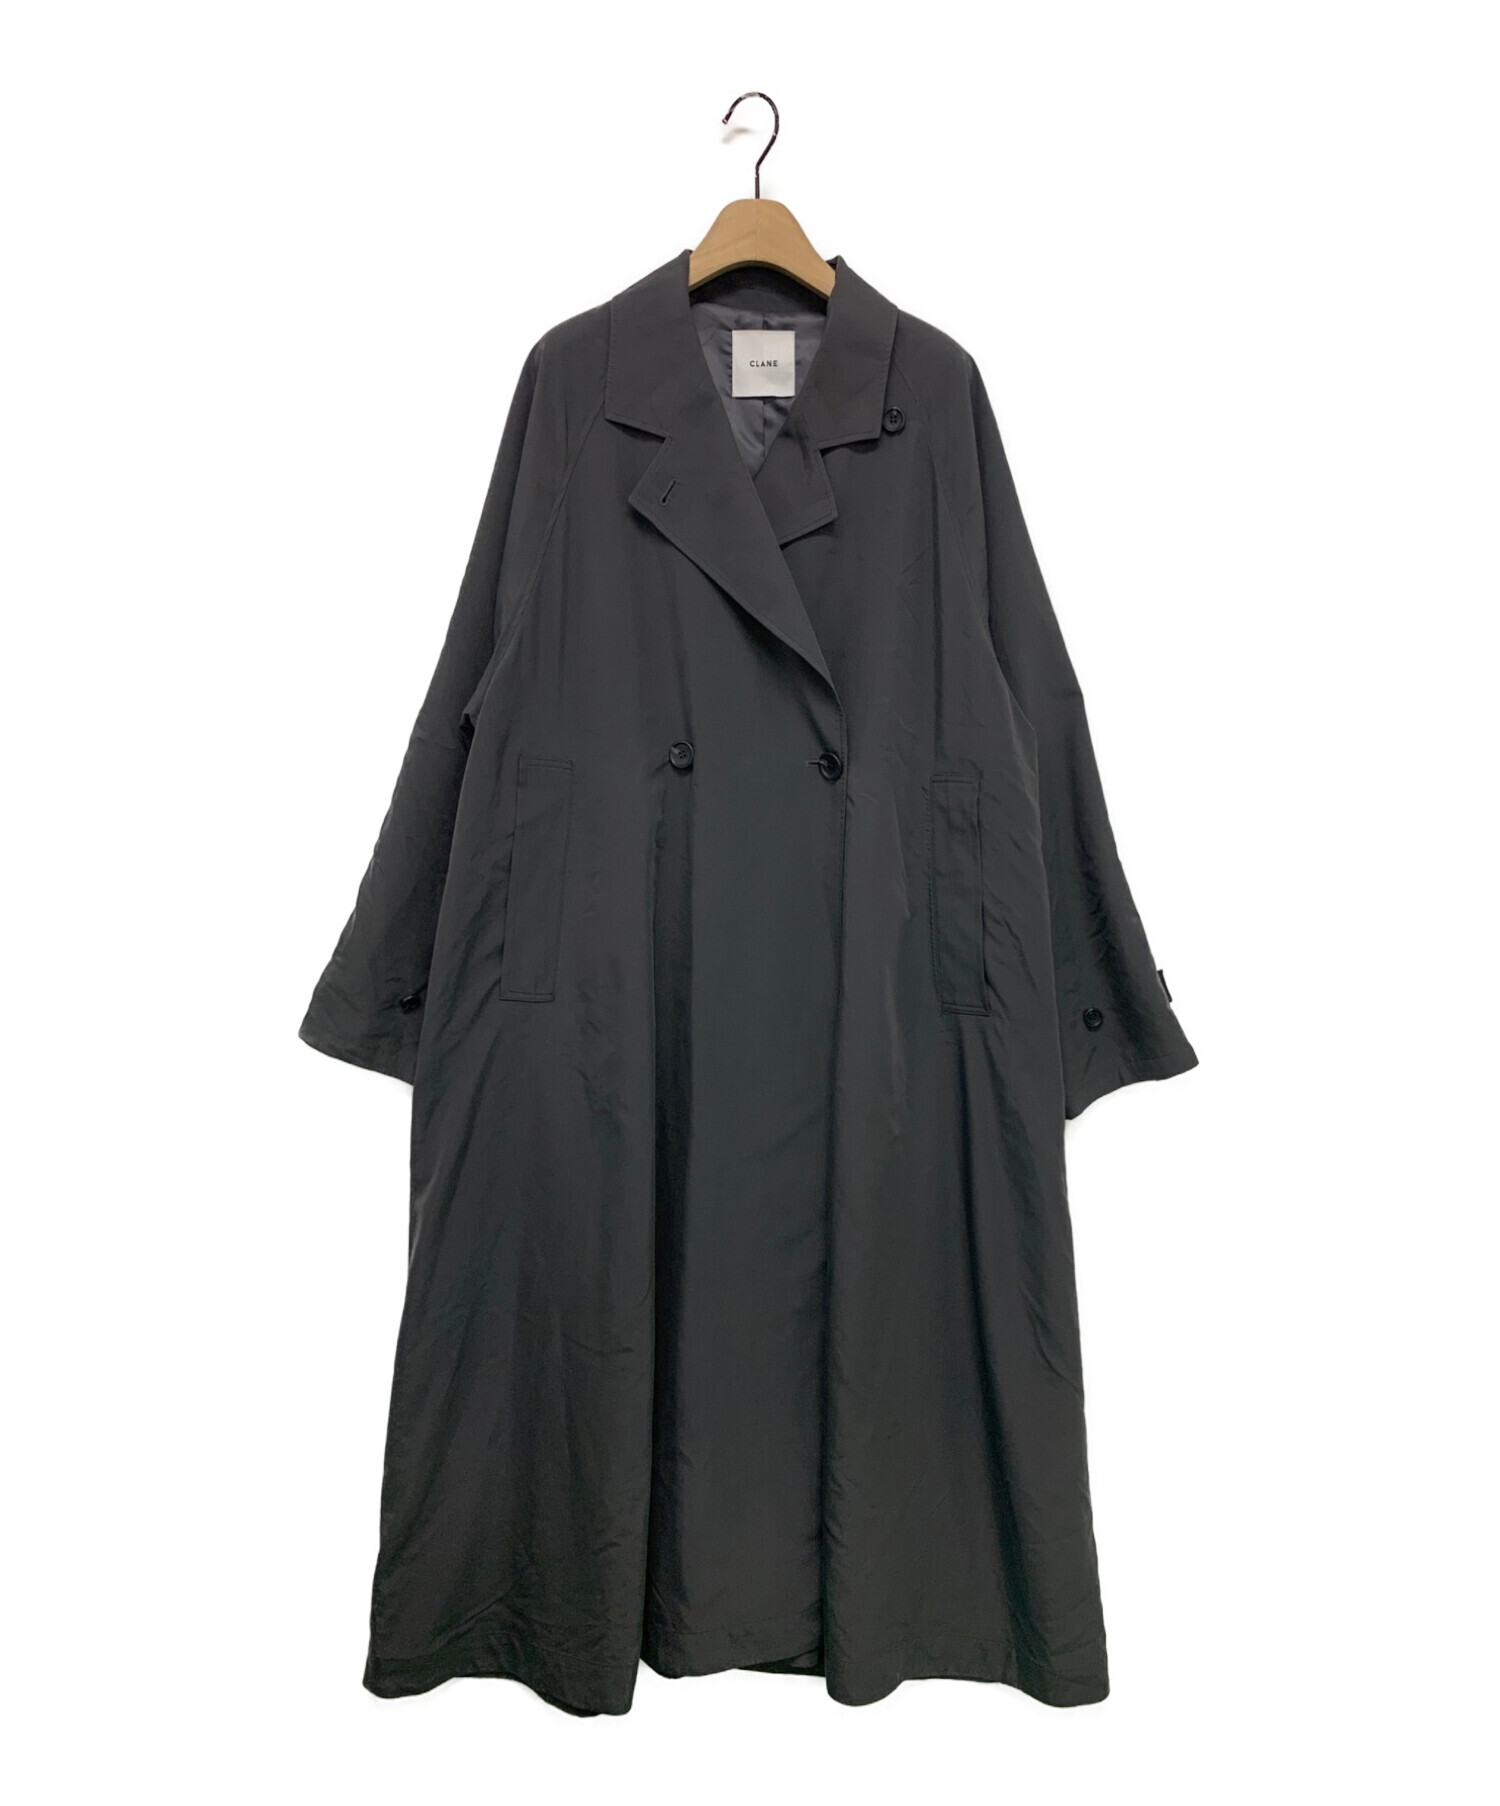 CLANE (クラネ) BACK GATHER DRESS TRENCH COAT グレー サイズ:2